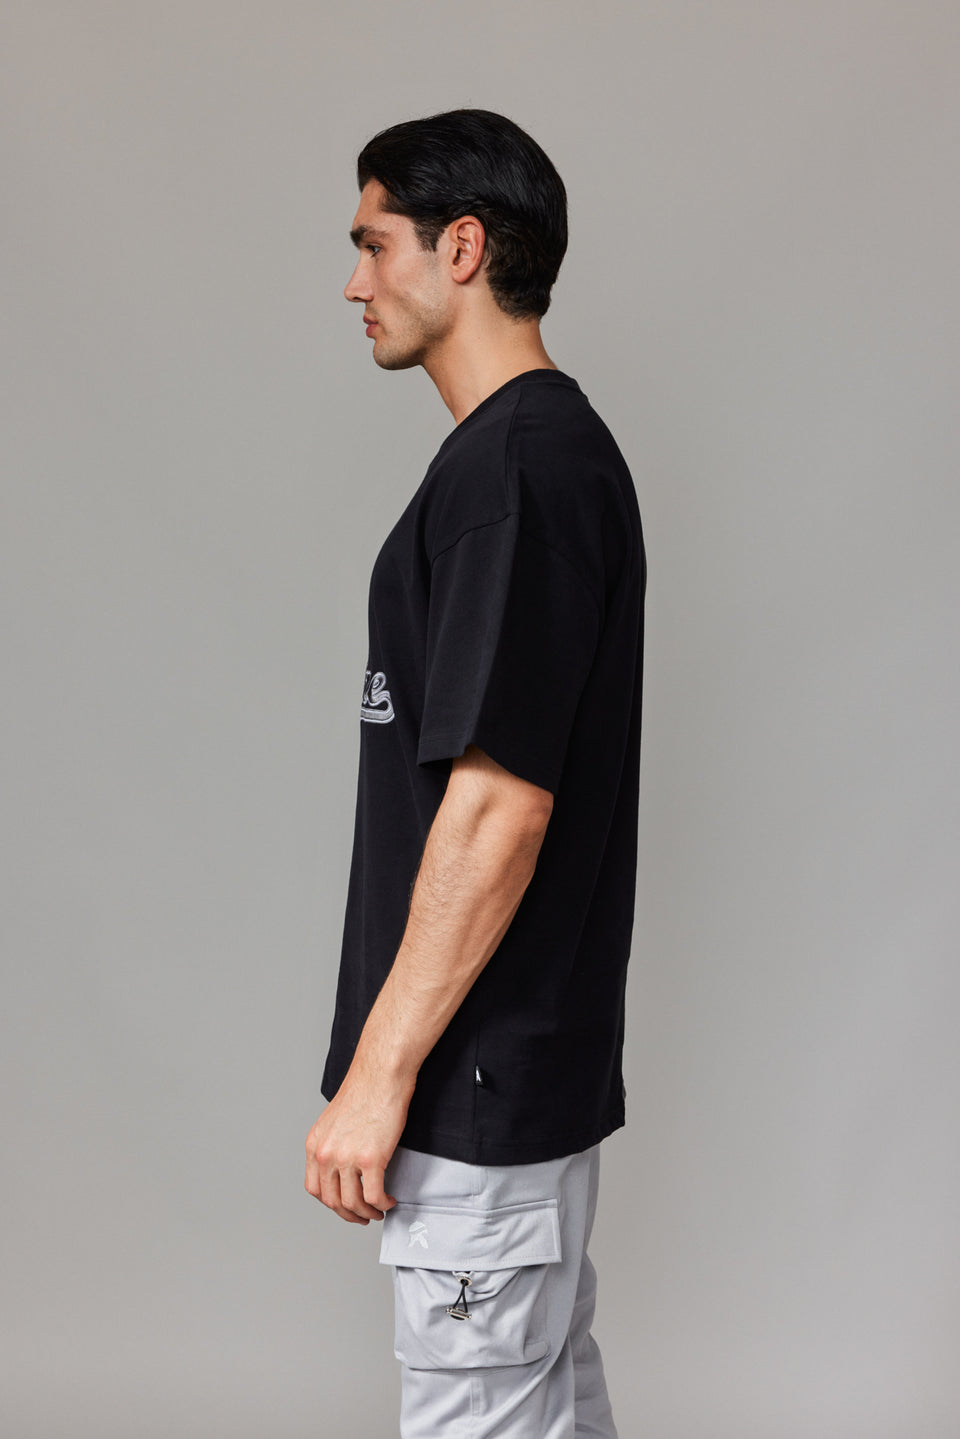 Baseball T-shirt - Black / Grey